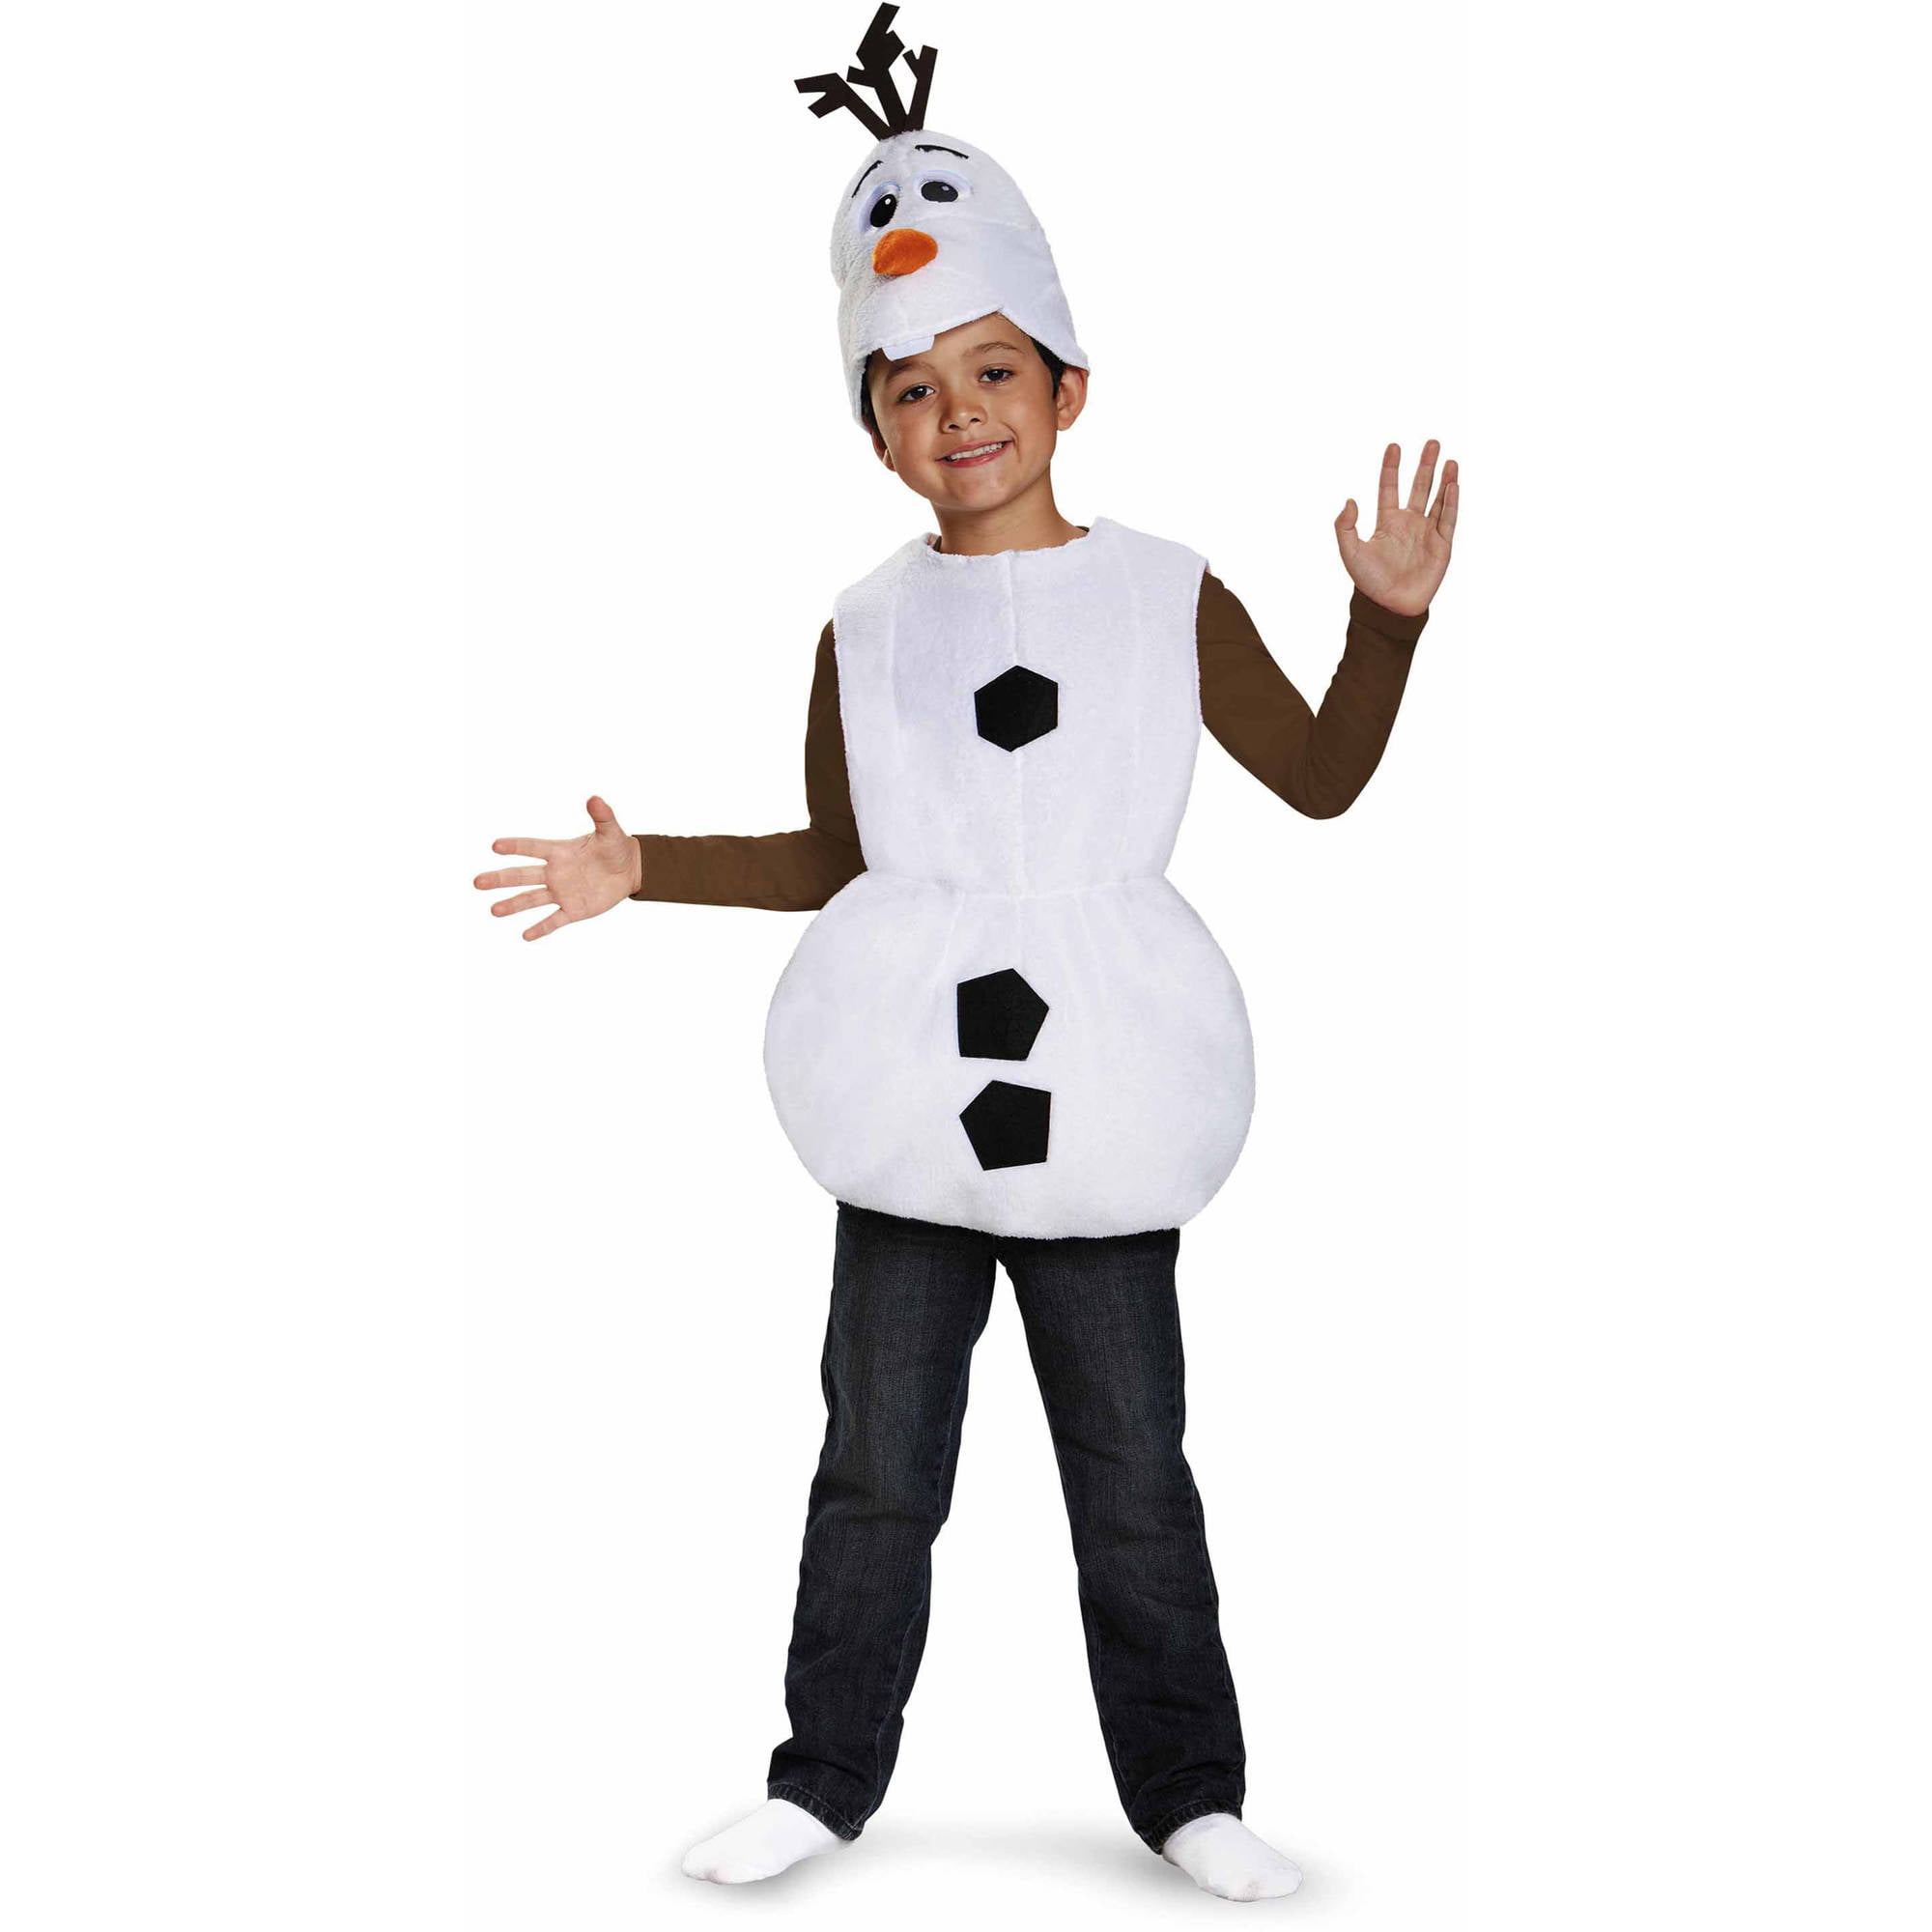 Frozen olaf basic toddler halloween dress up role play costume 3t/4t - Walmart.com